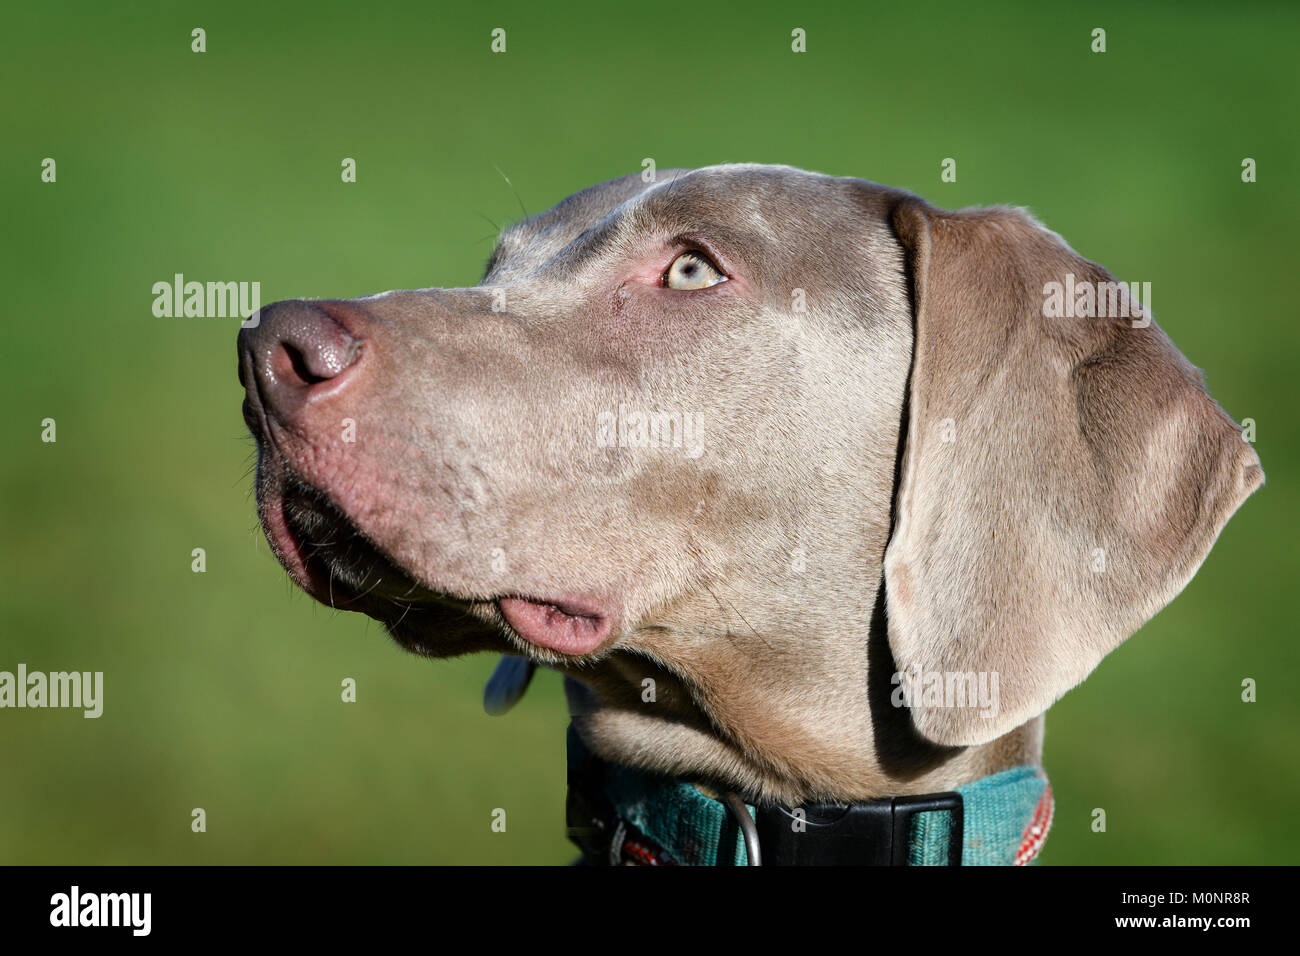 A Weimaraner Dog Stock Photo